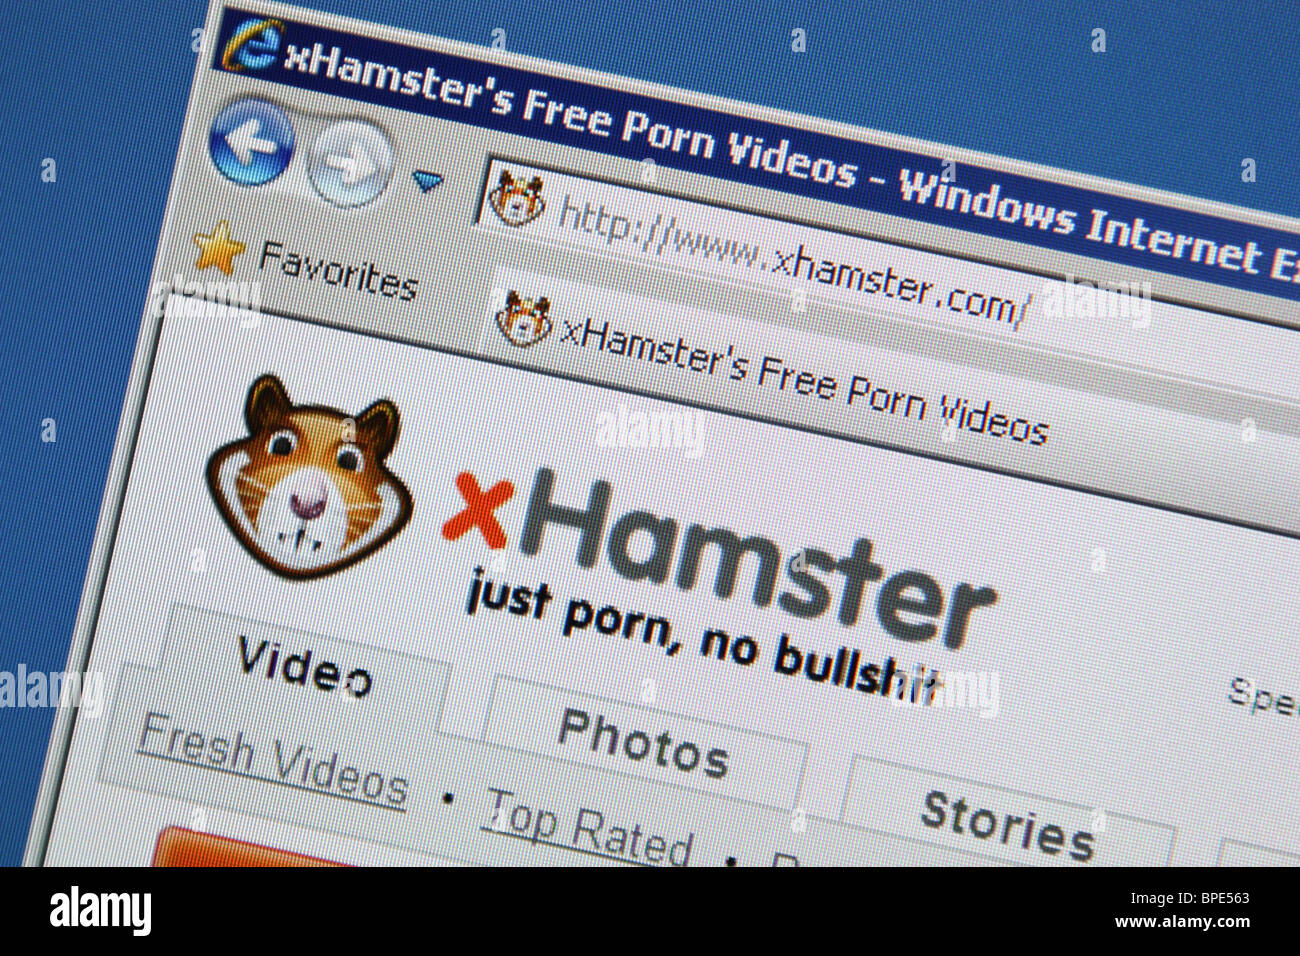 Xhamster Porno Online